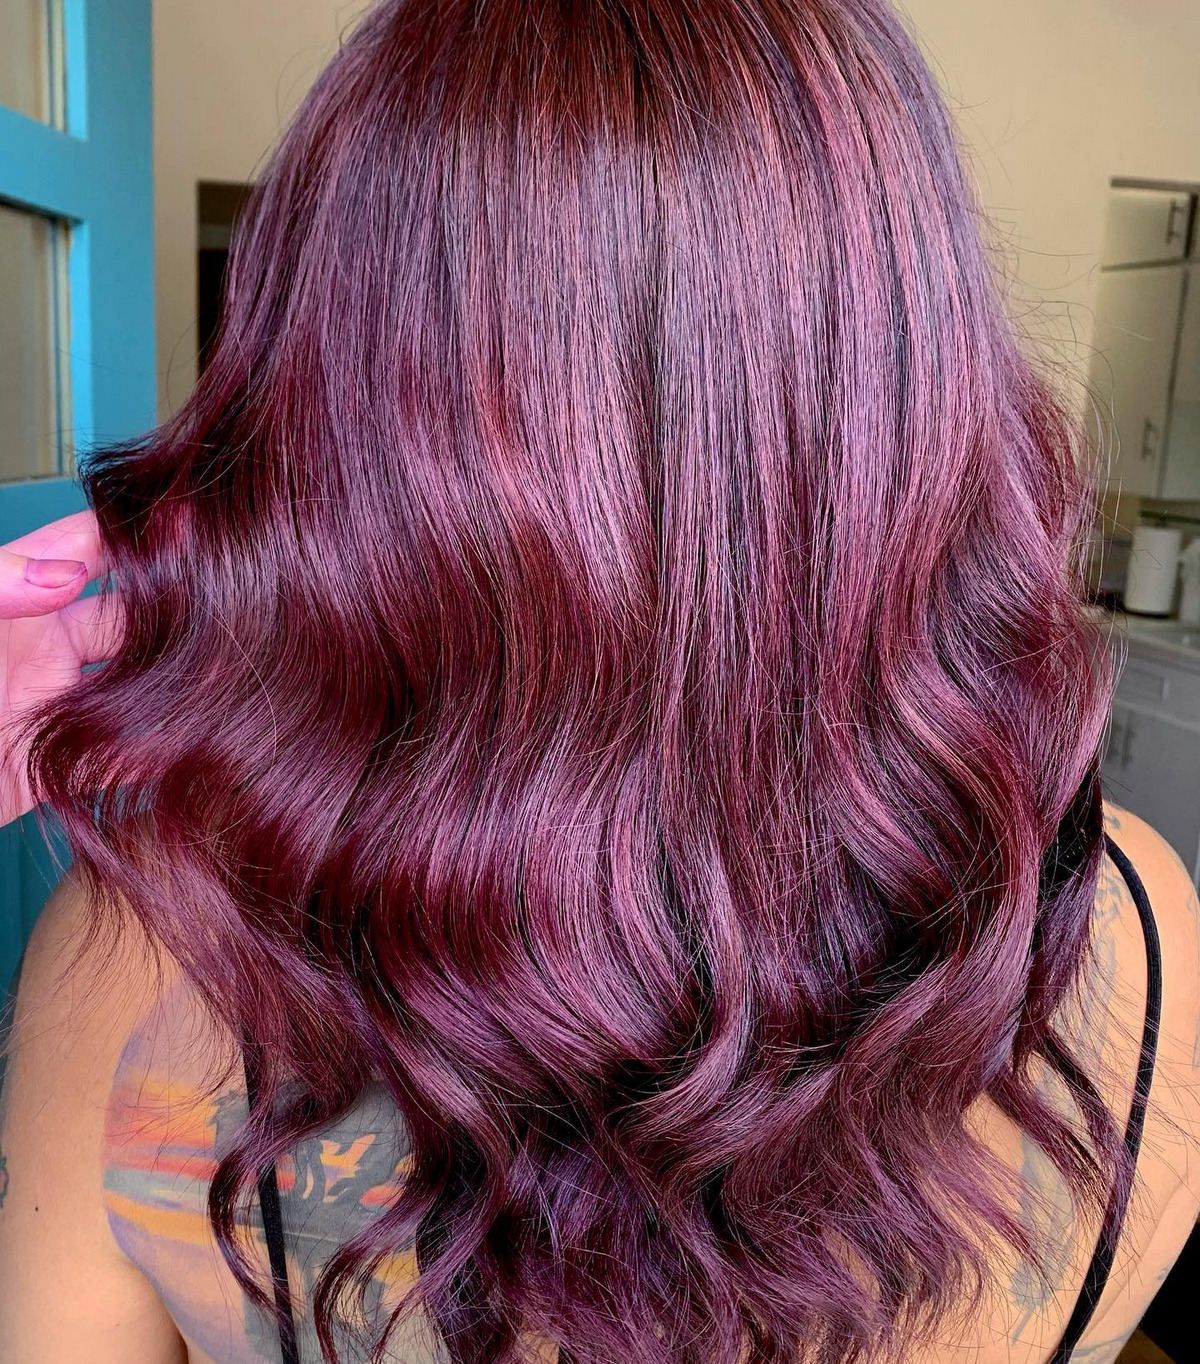 Medium-Length Hair With Wine Color